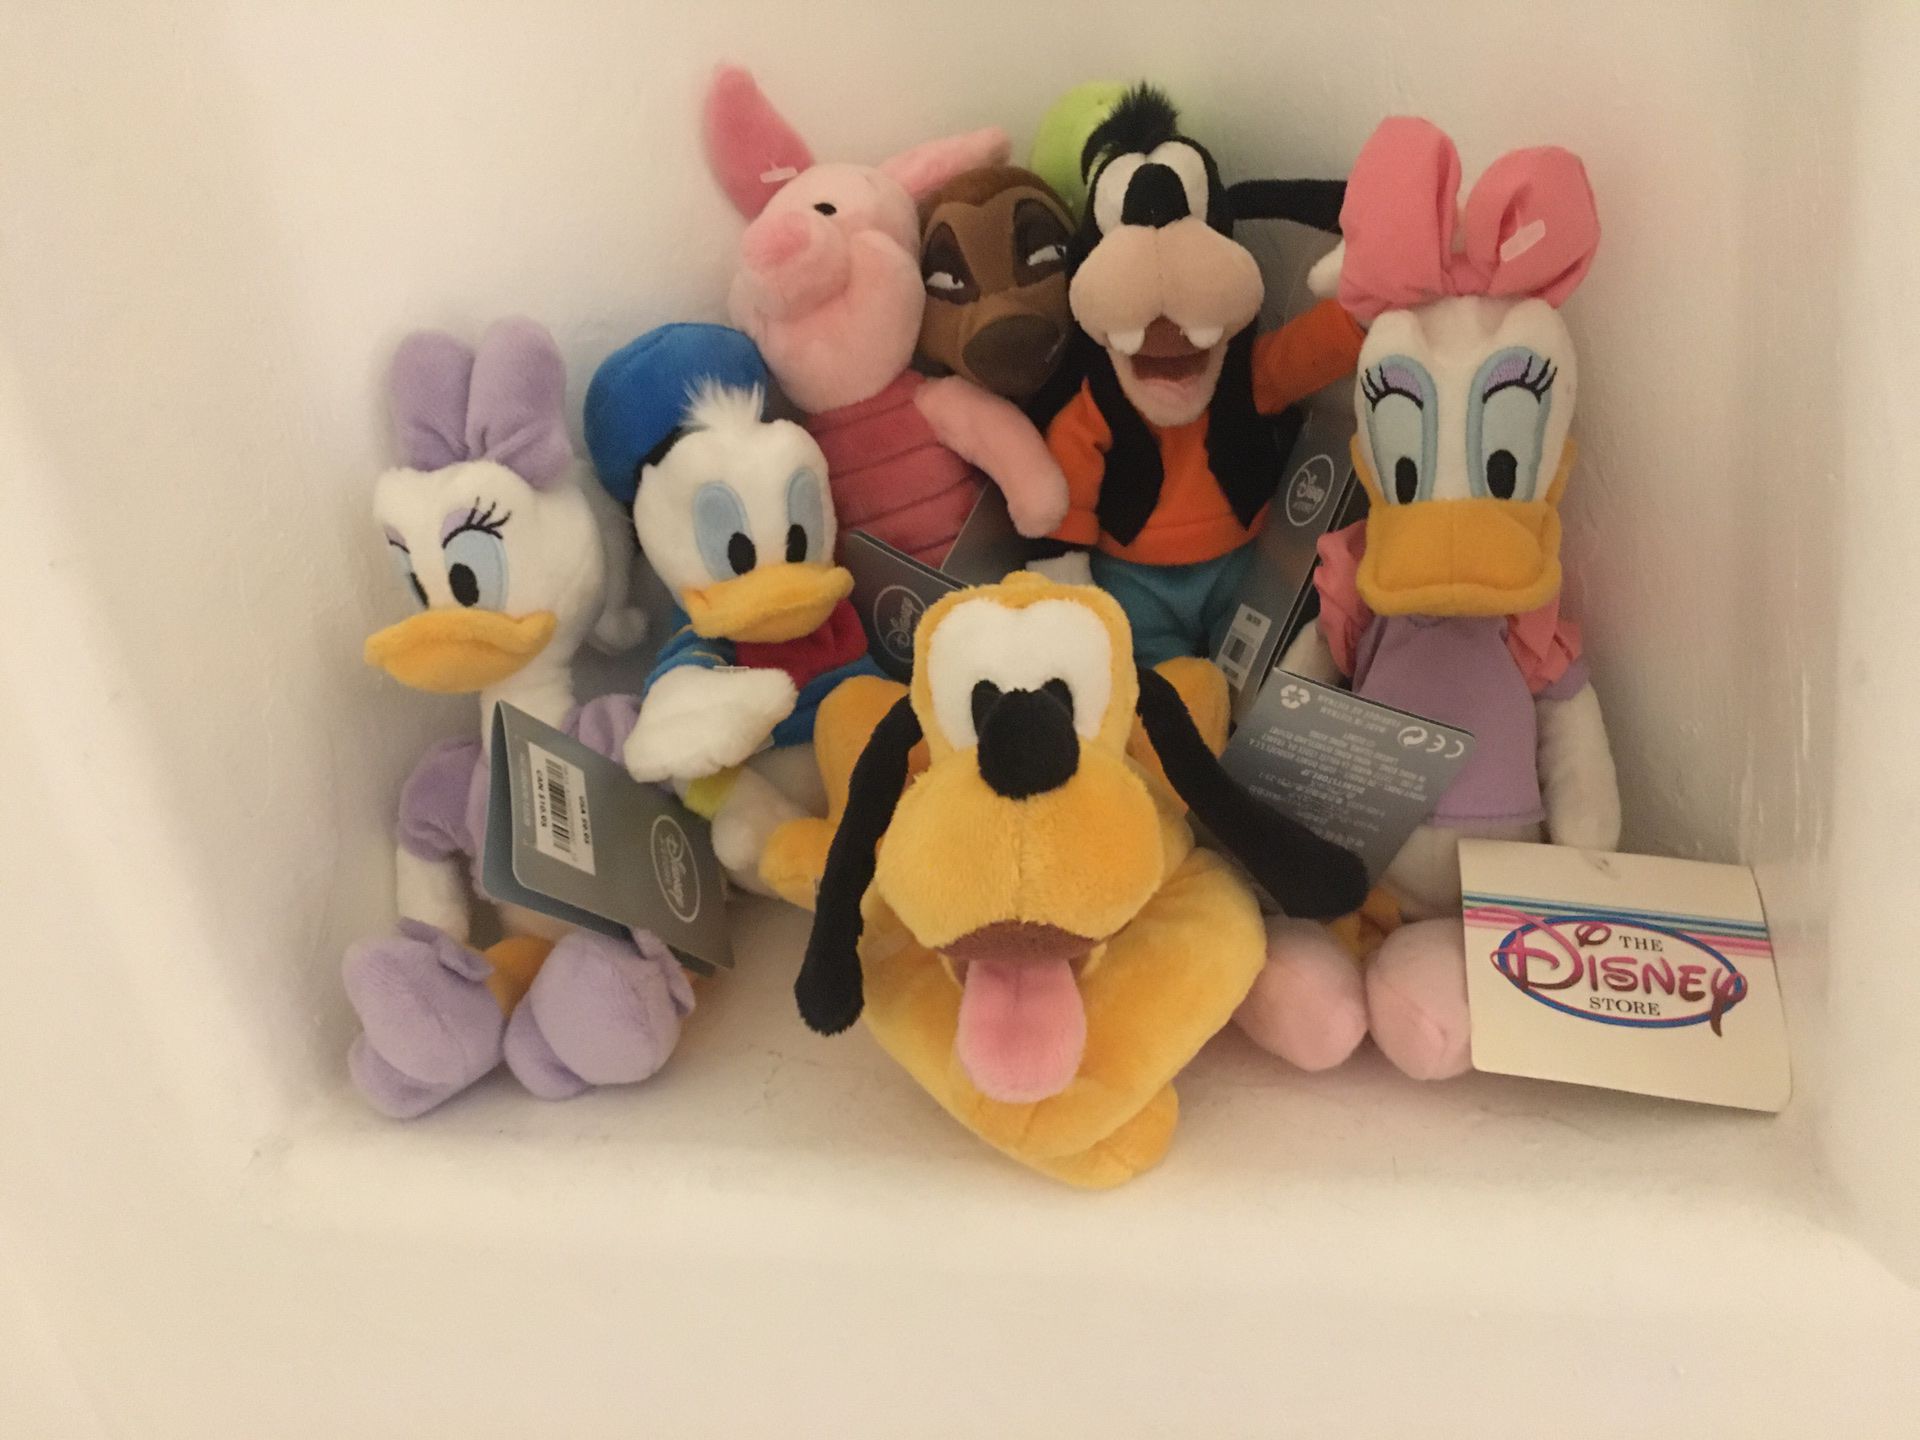 7 mini Disney stuffed toys